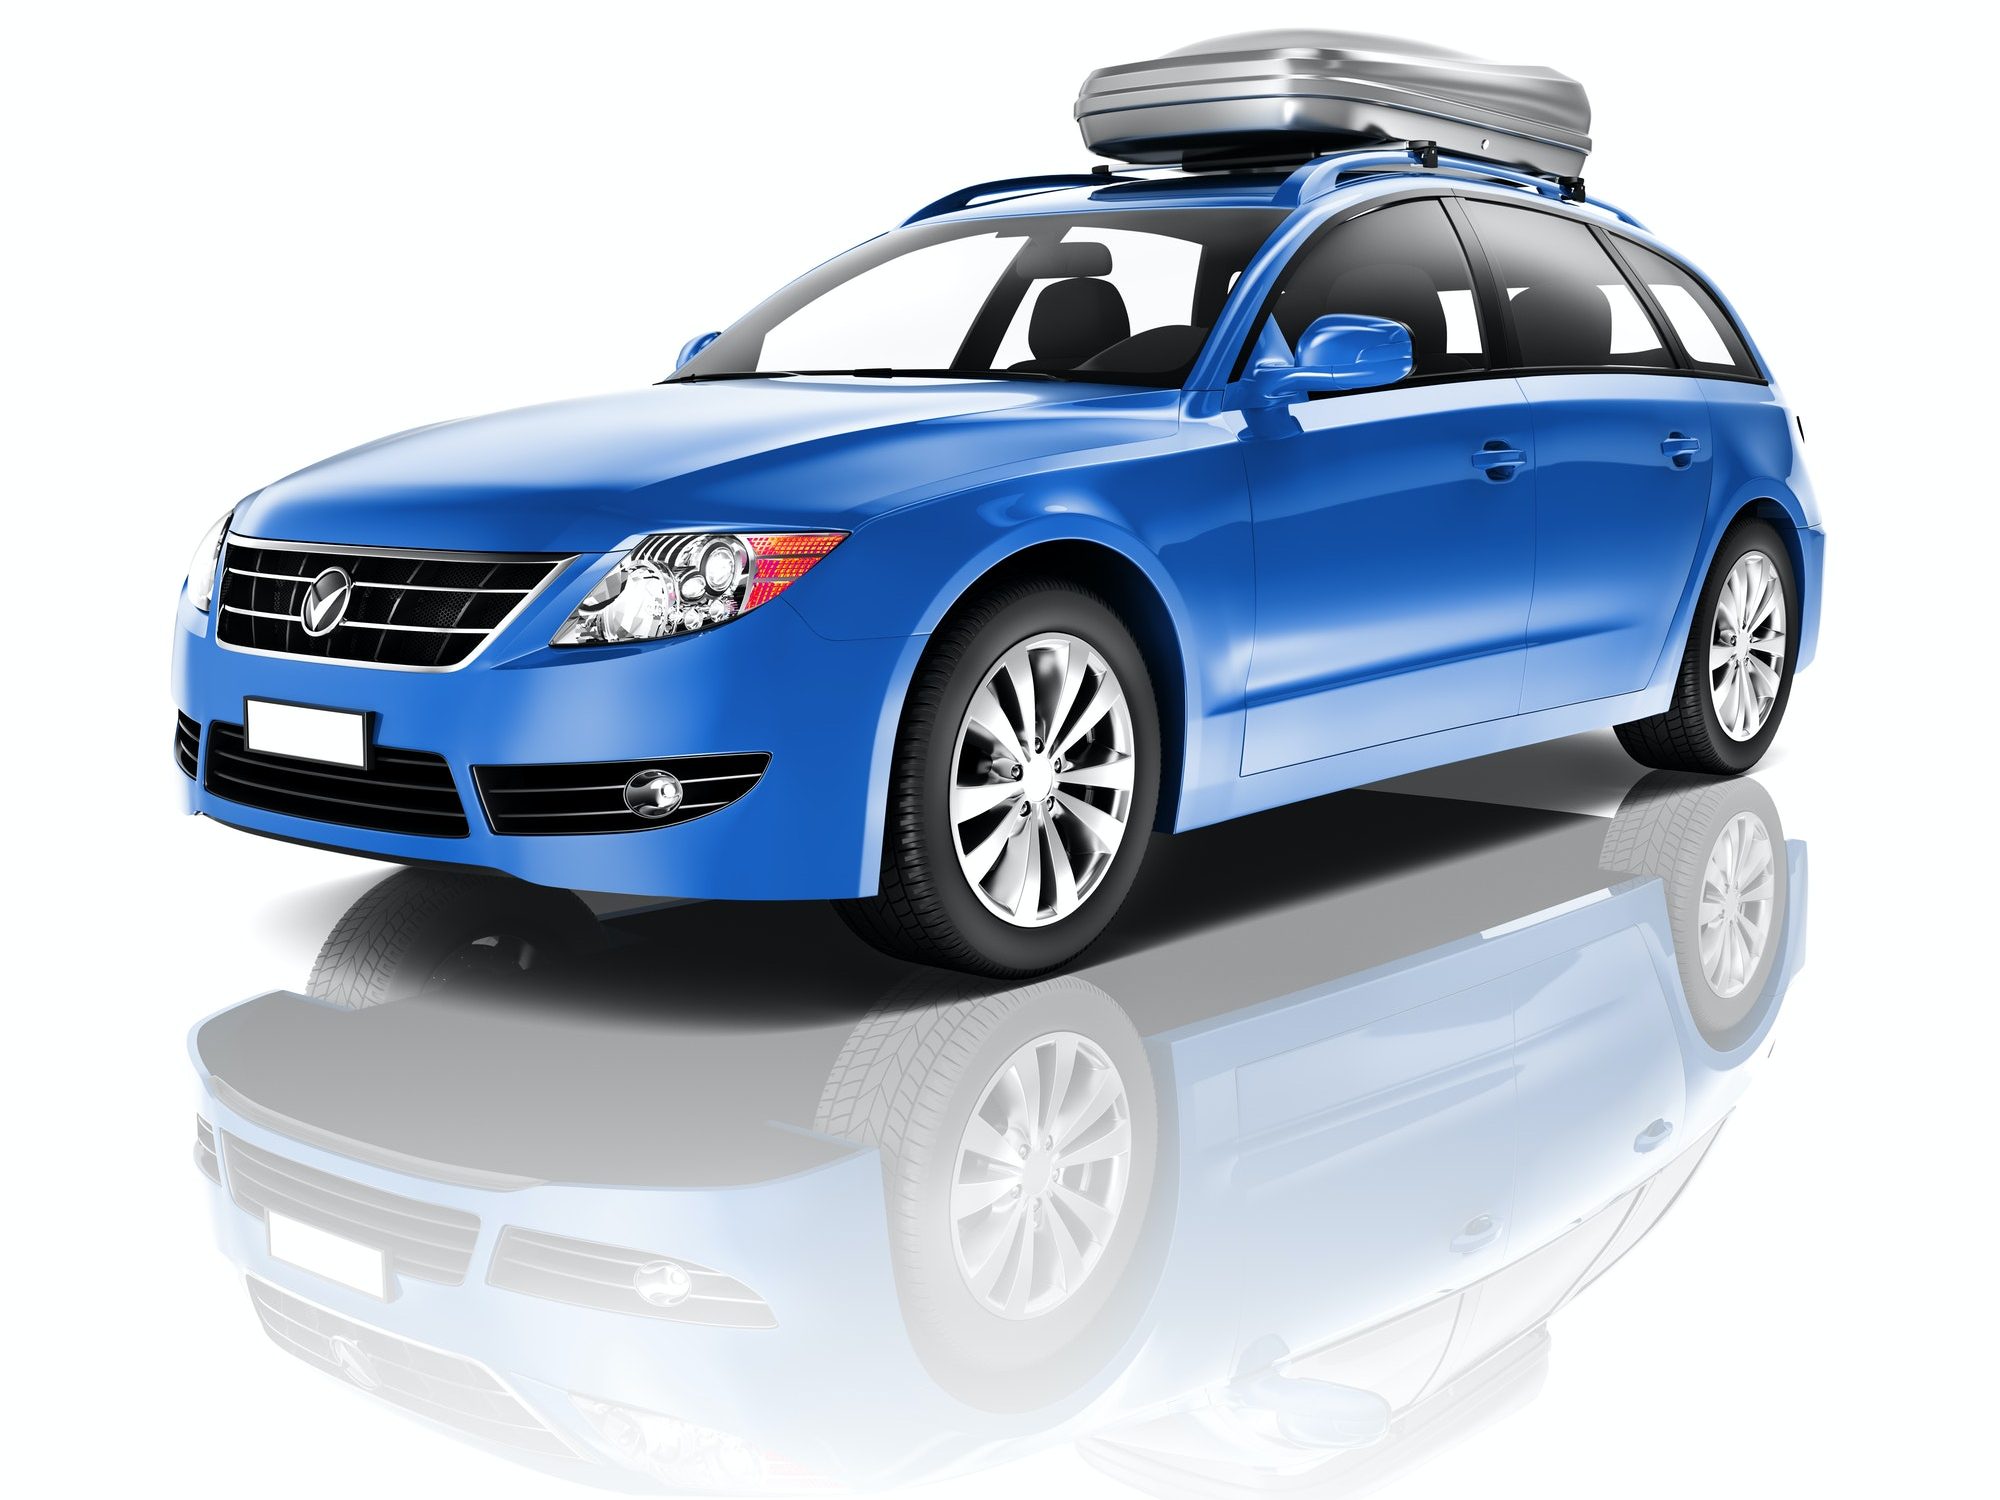 Three Dimensional Image of a Blue Car